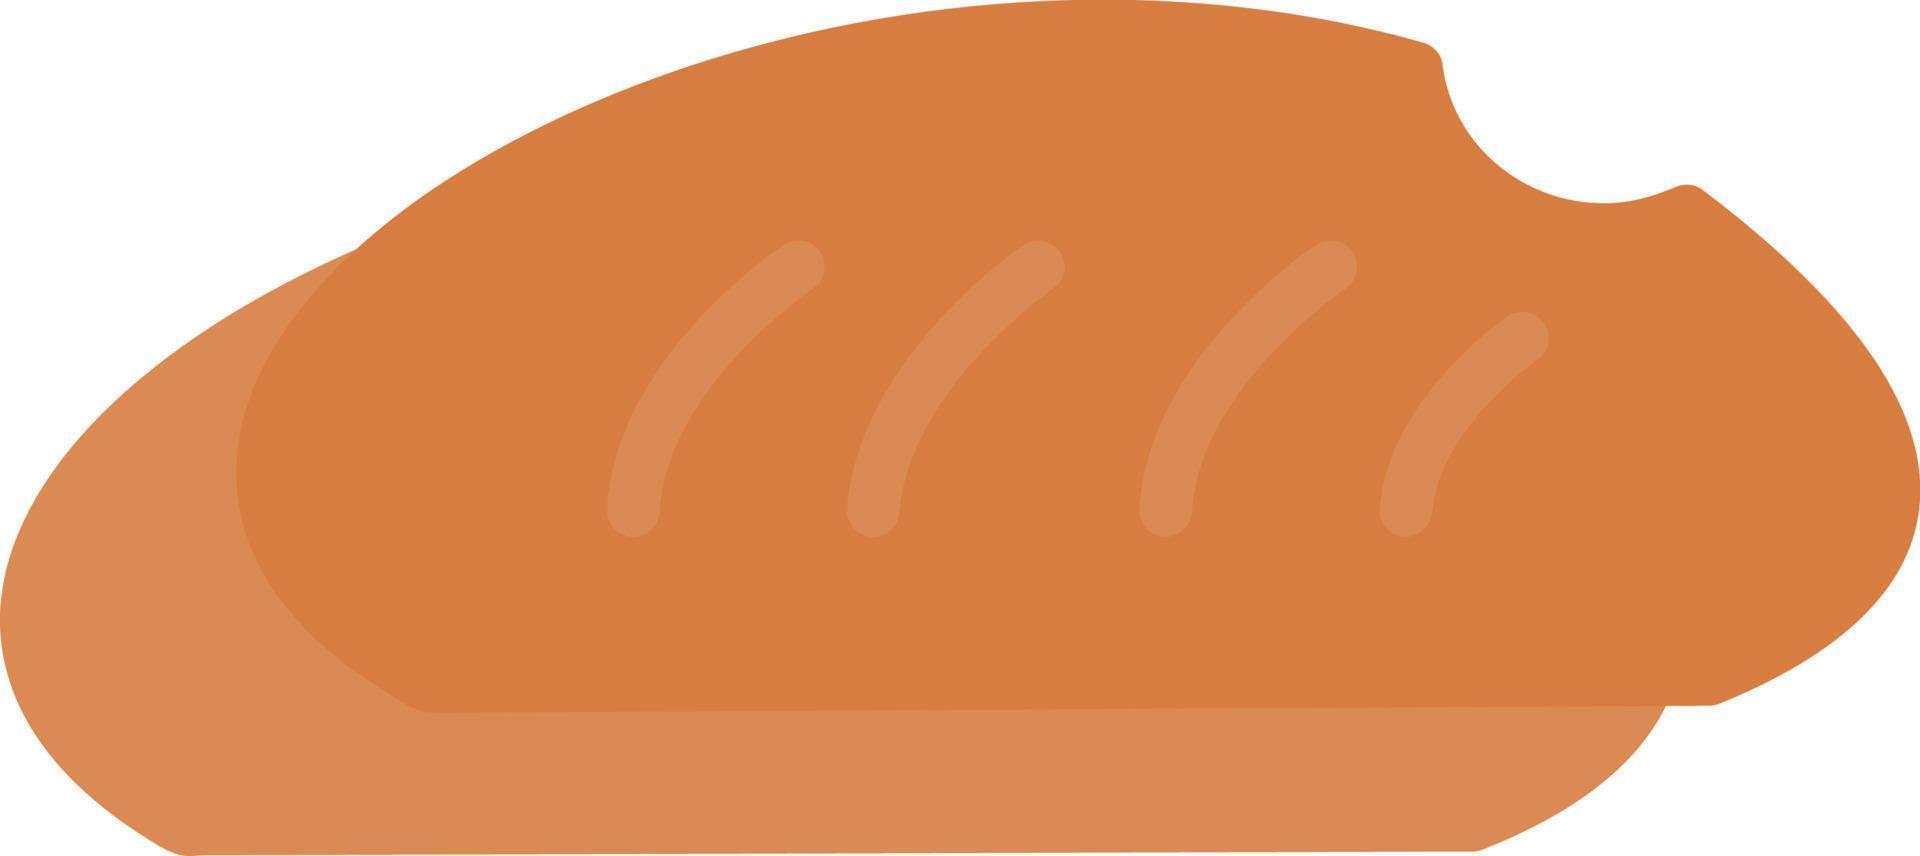 icono de pan plano vector